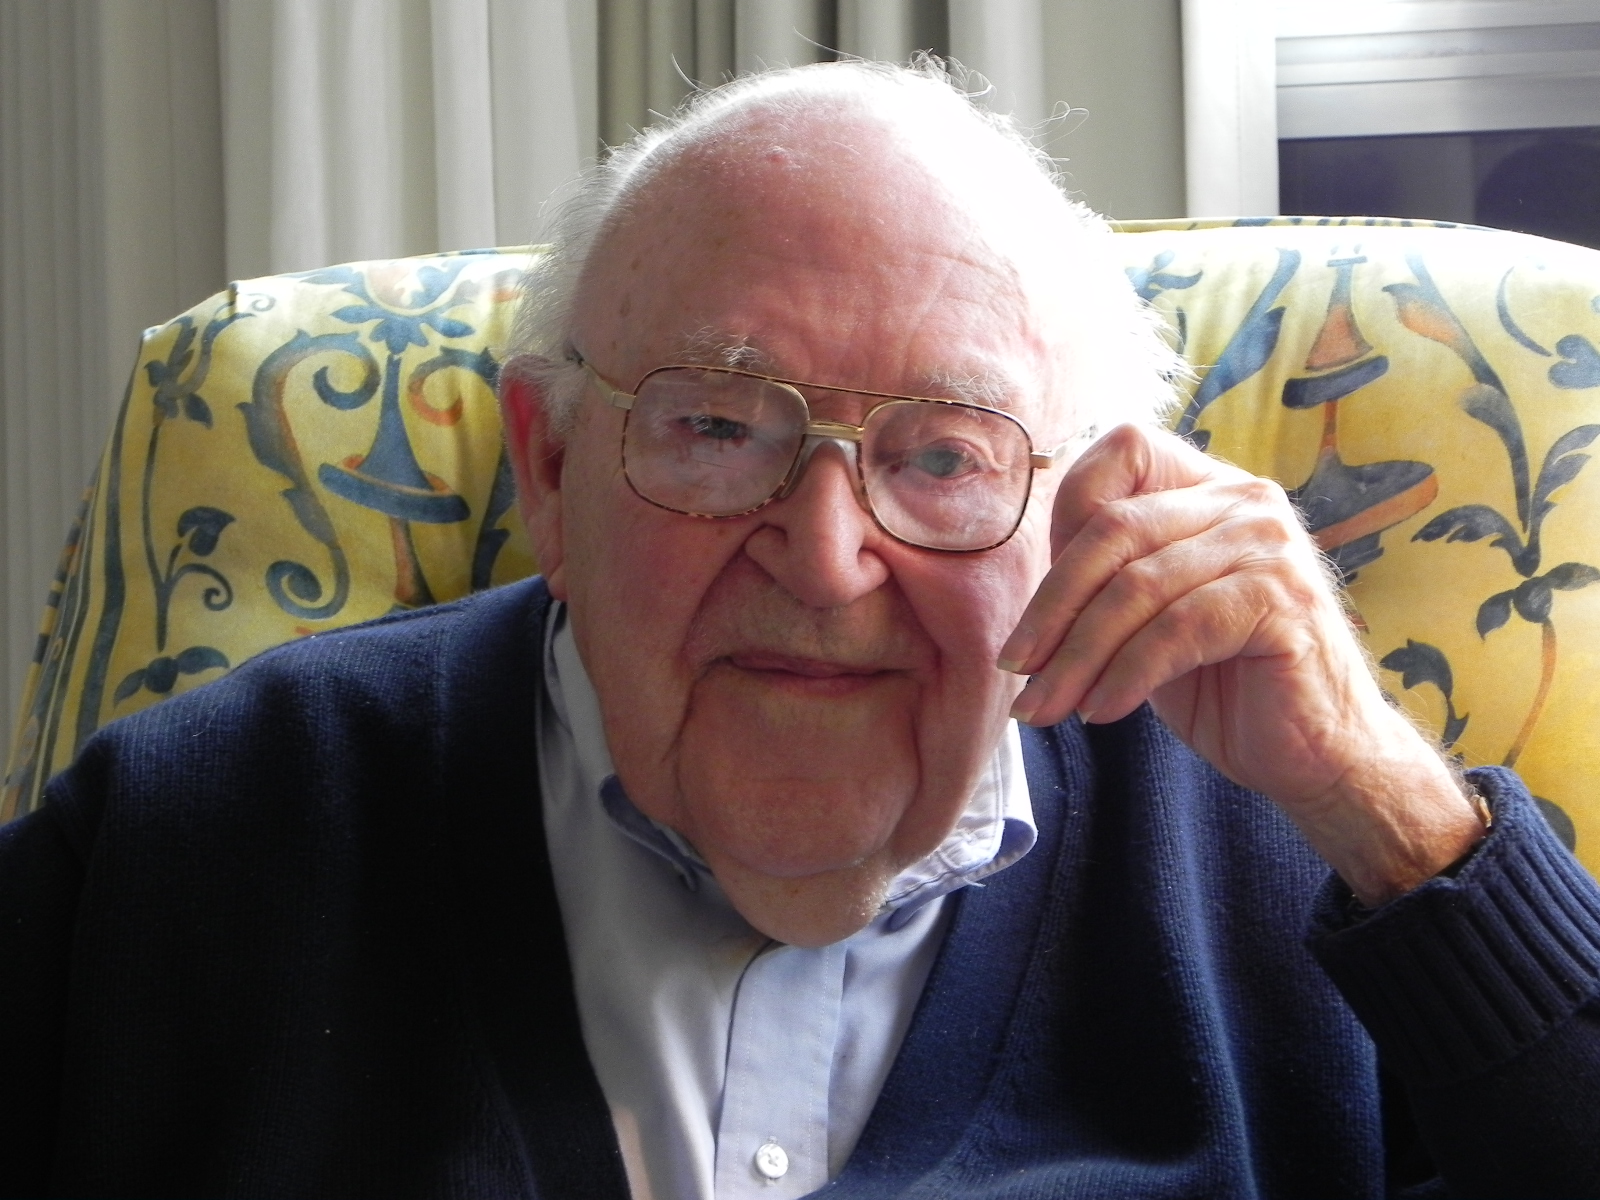 Lou Bourgeois at 94